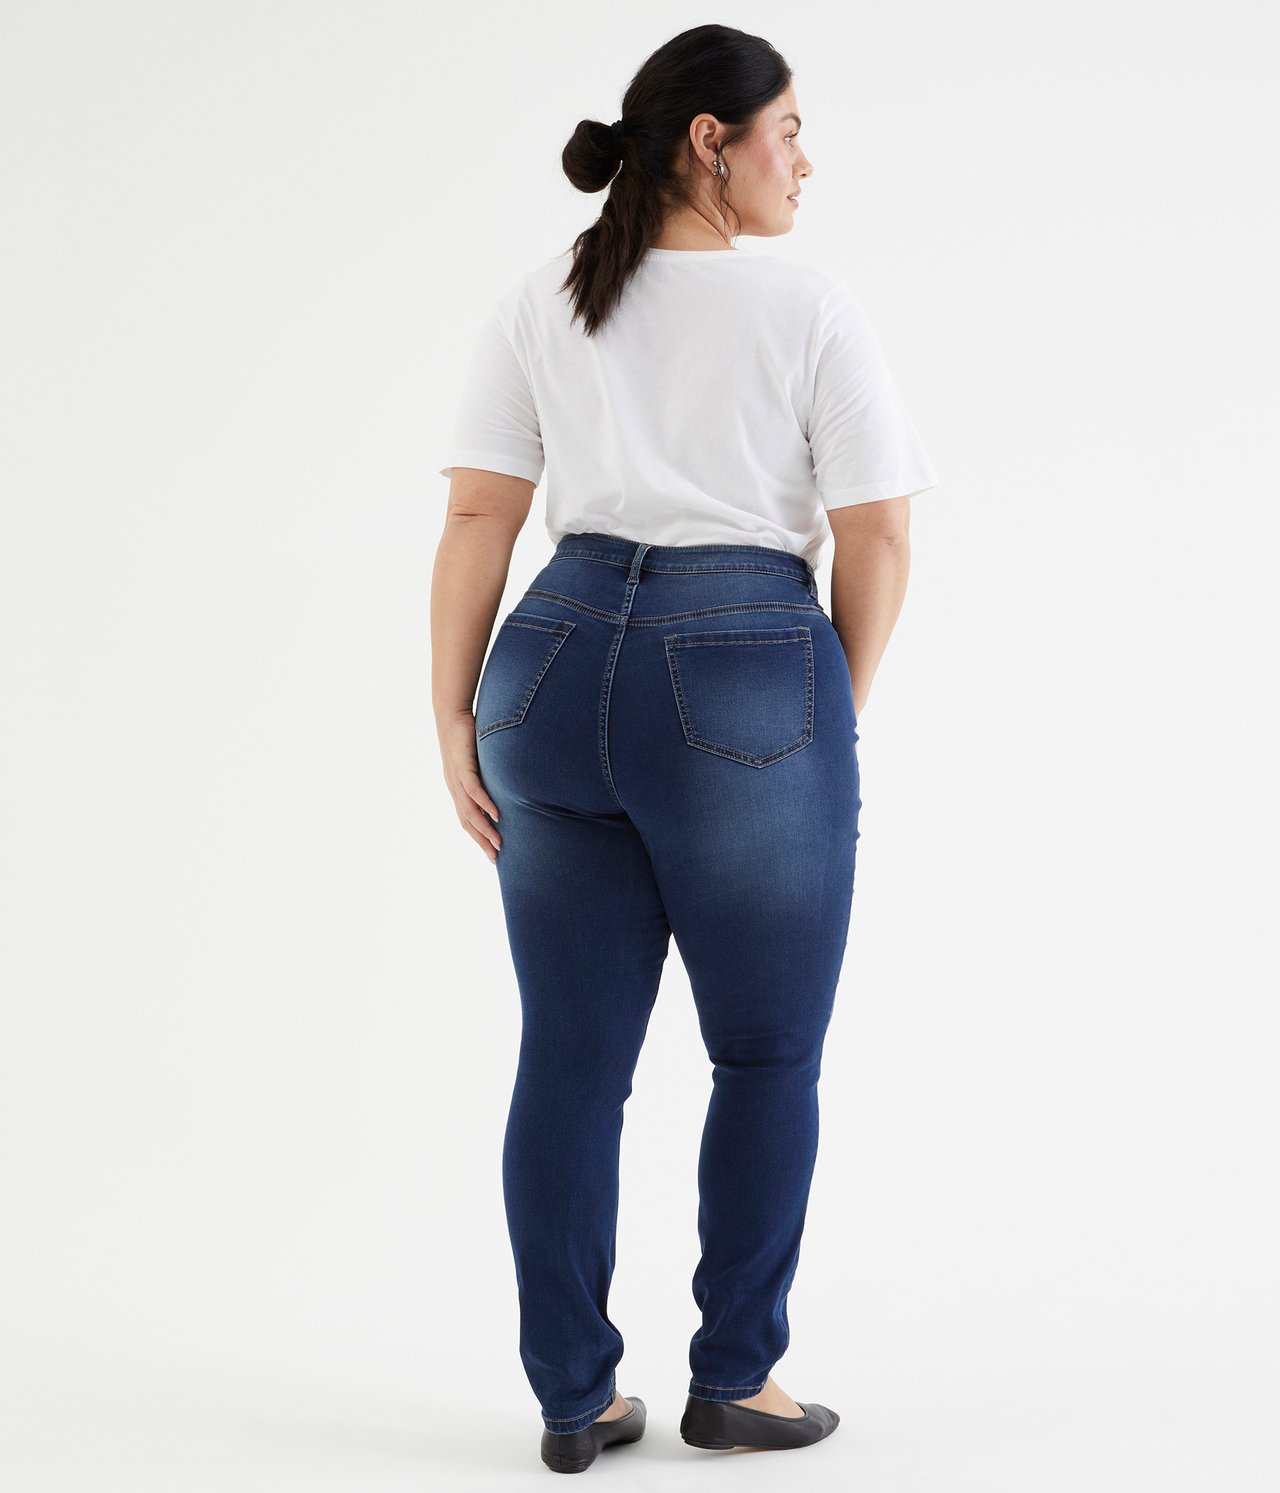 Ebba slim jeans extra long leg - Tumma denimi - 177cm / Storlek: 50L - 4